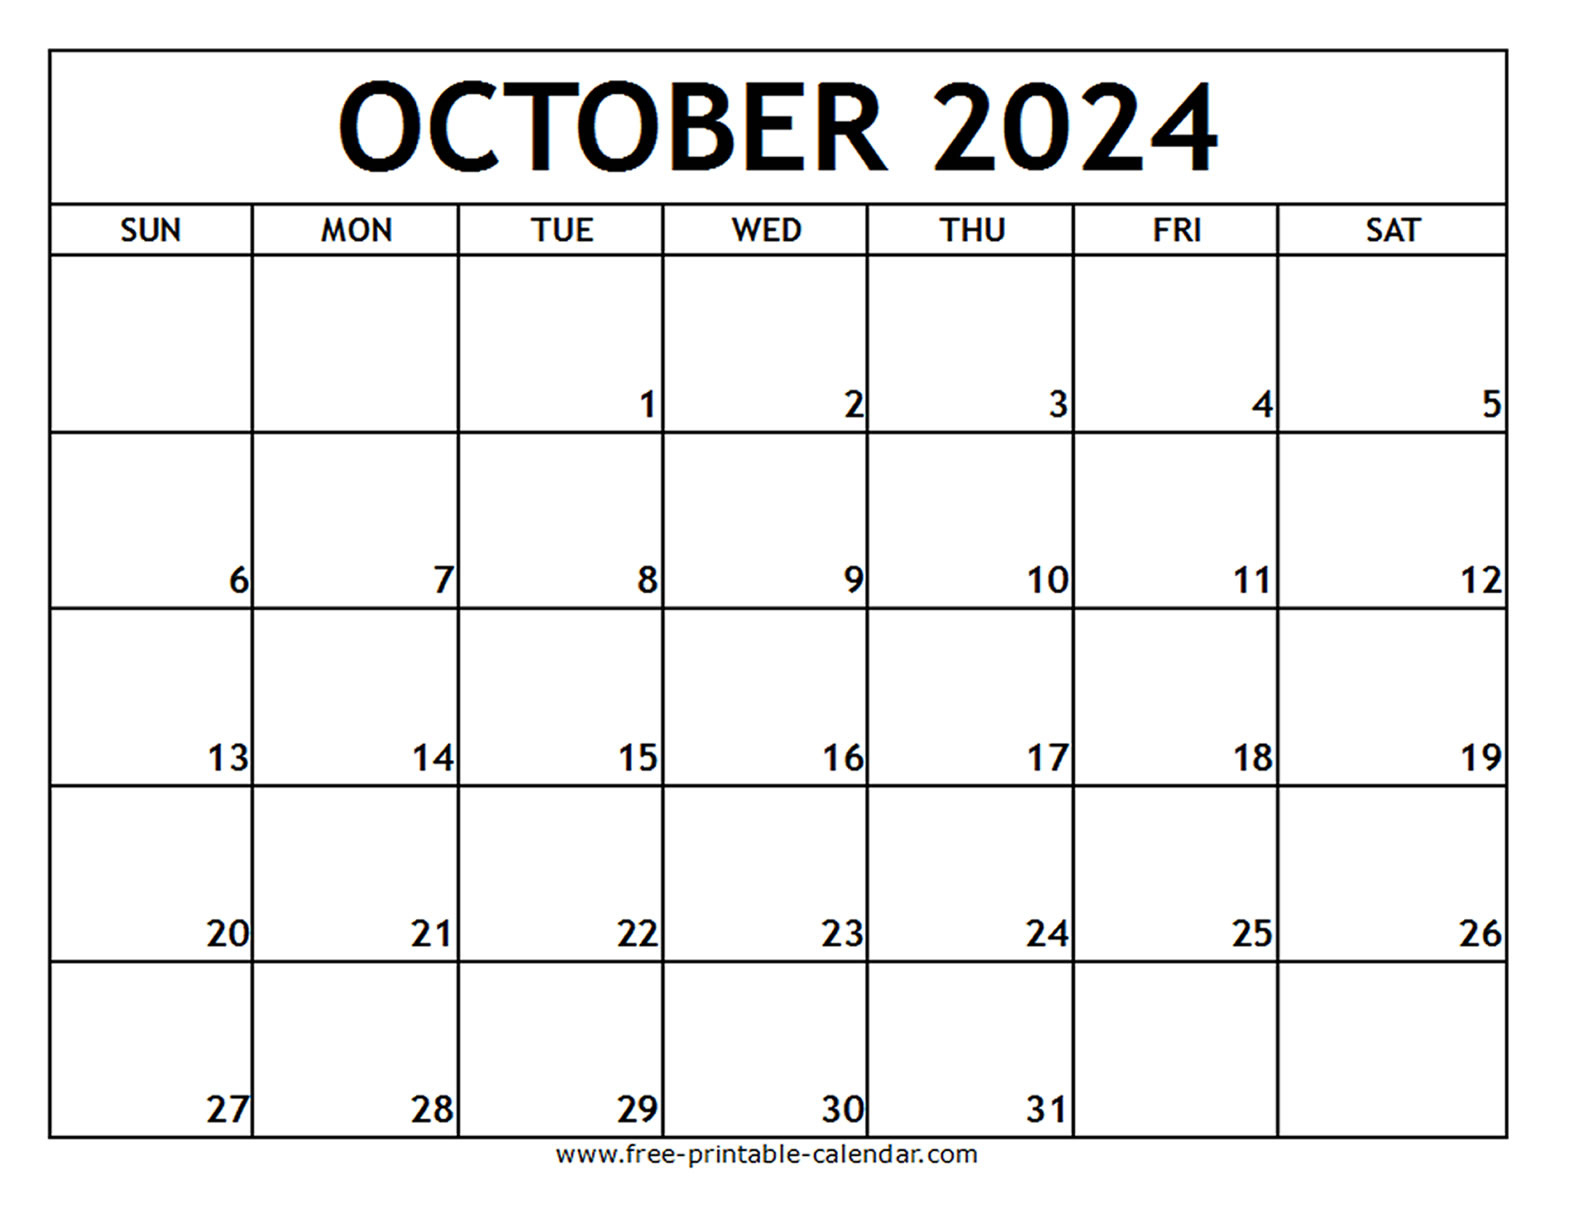 October 2024 Printable Calendar - Free-Printable-Calendar throughout Free Printable Calendar 2024 October